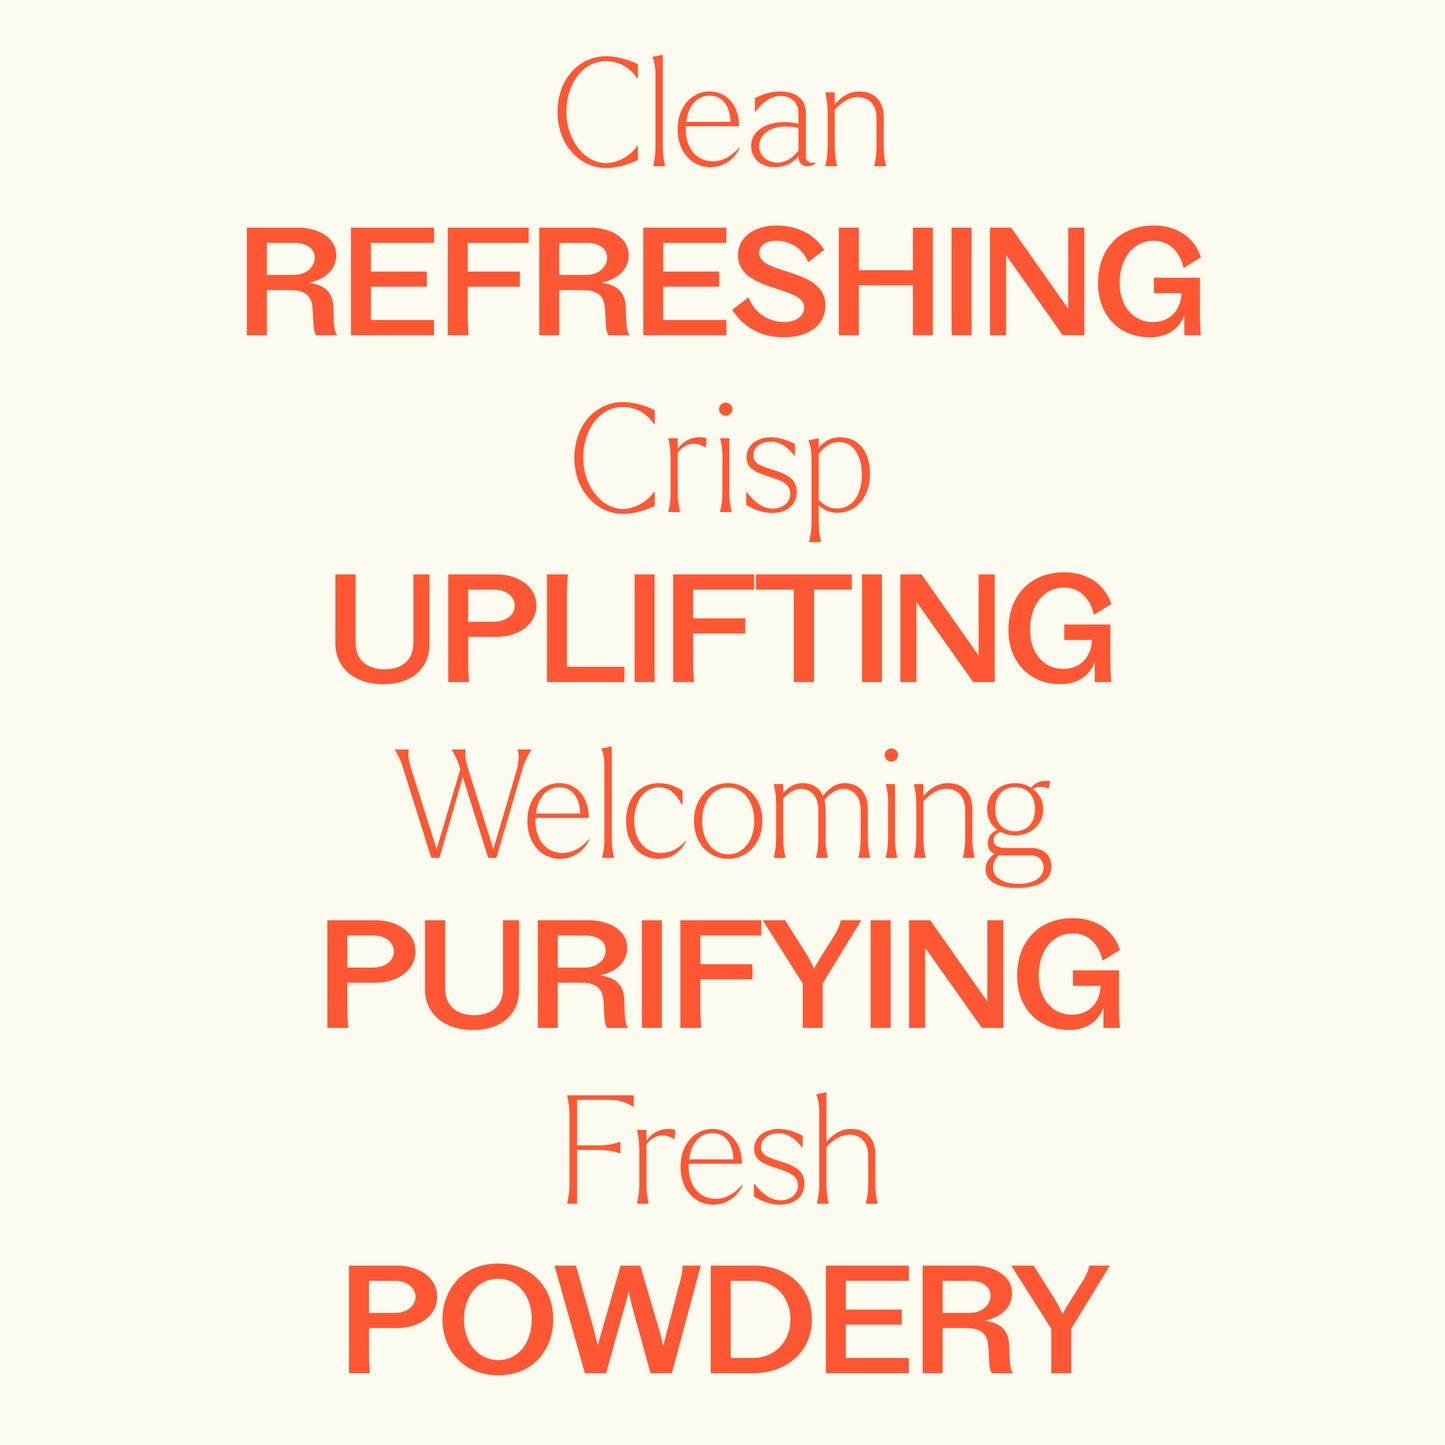 Clean, crisp, welcoming, fresh, refreshing, uplifting, purifying, powdery